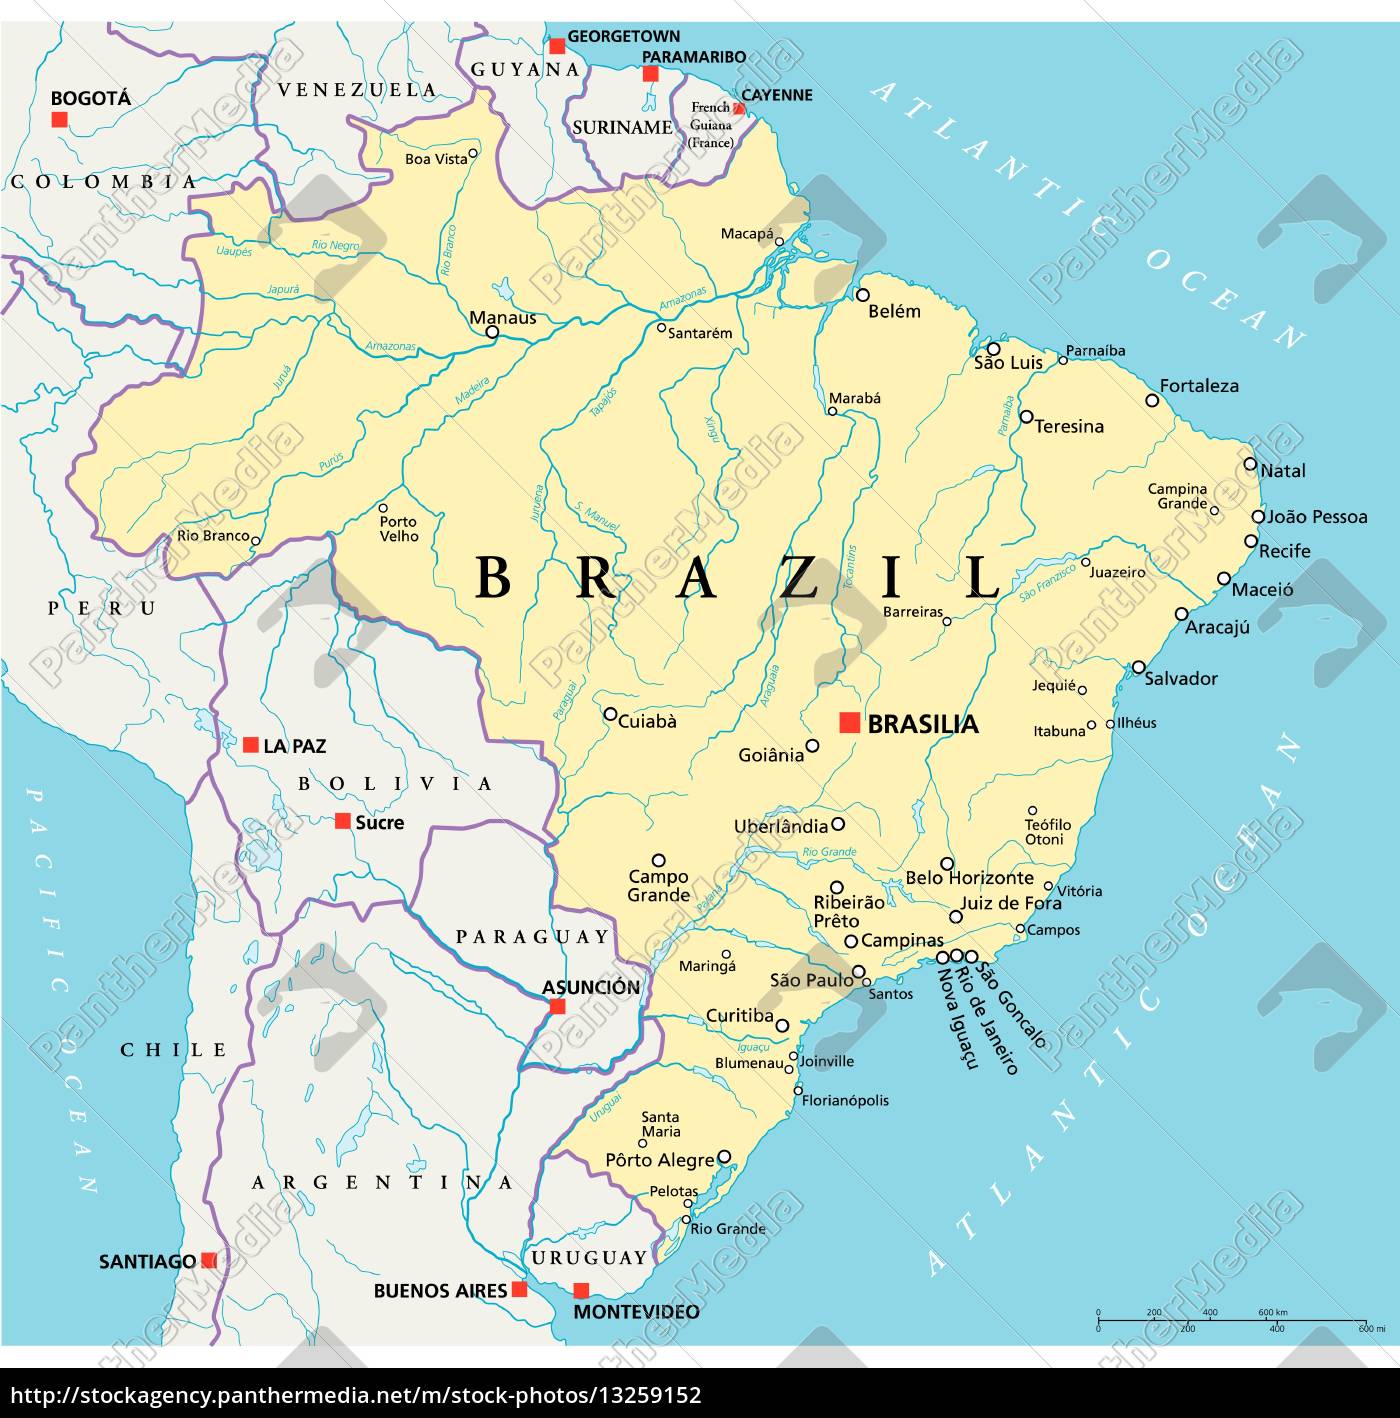 brasilien political map - Lizenzfreies Foto - #13259152 ...